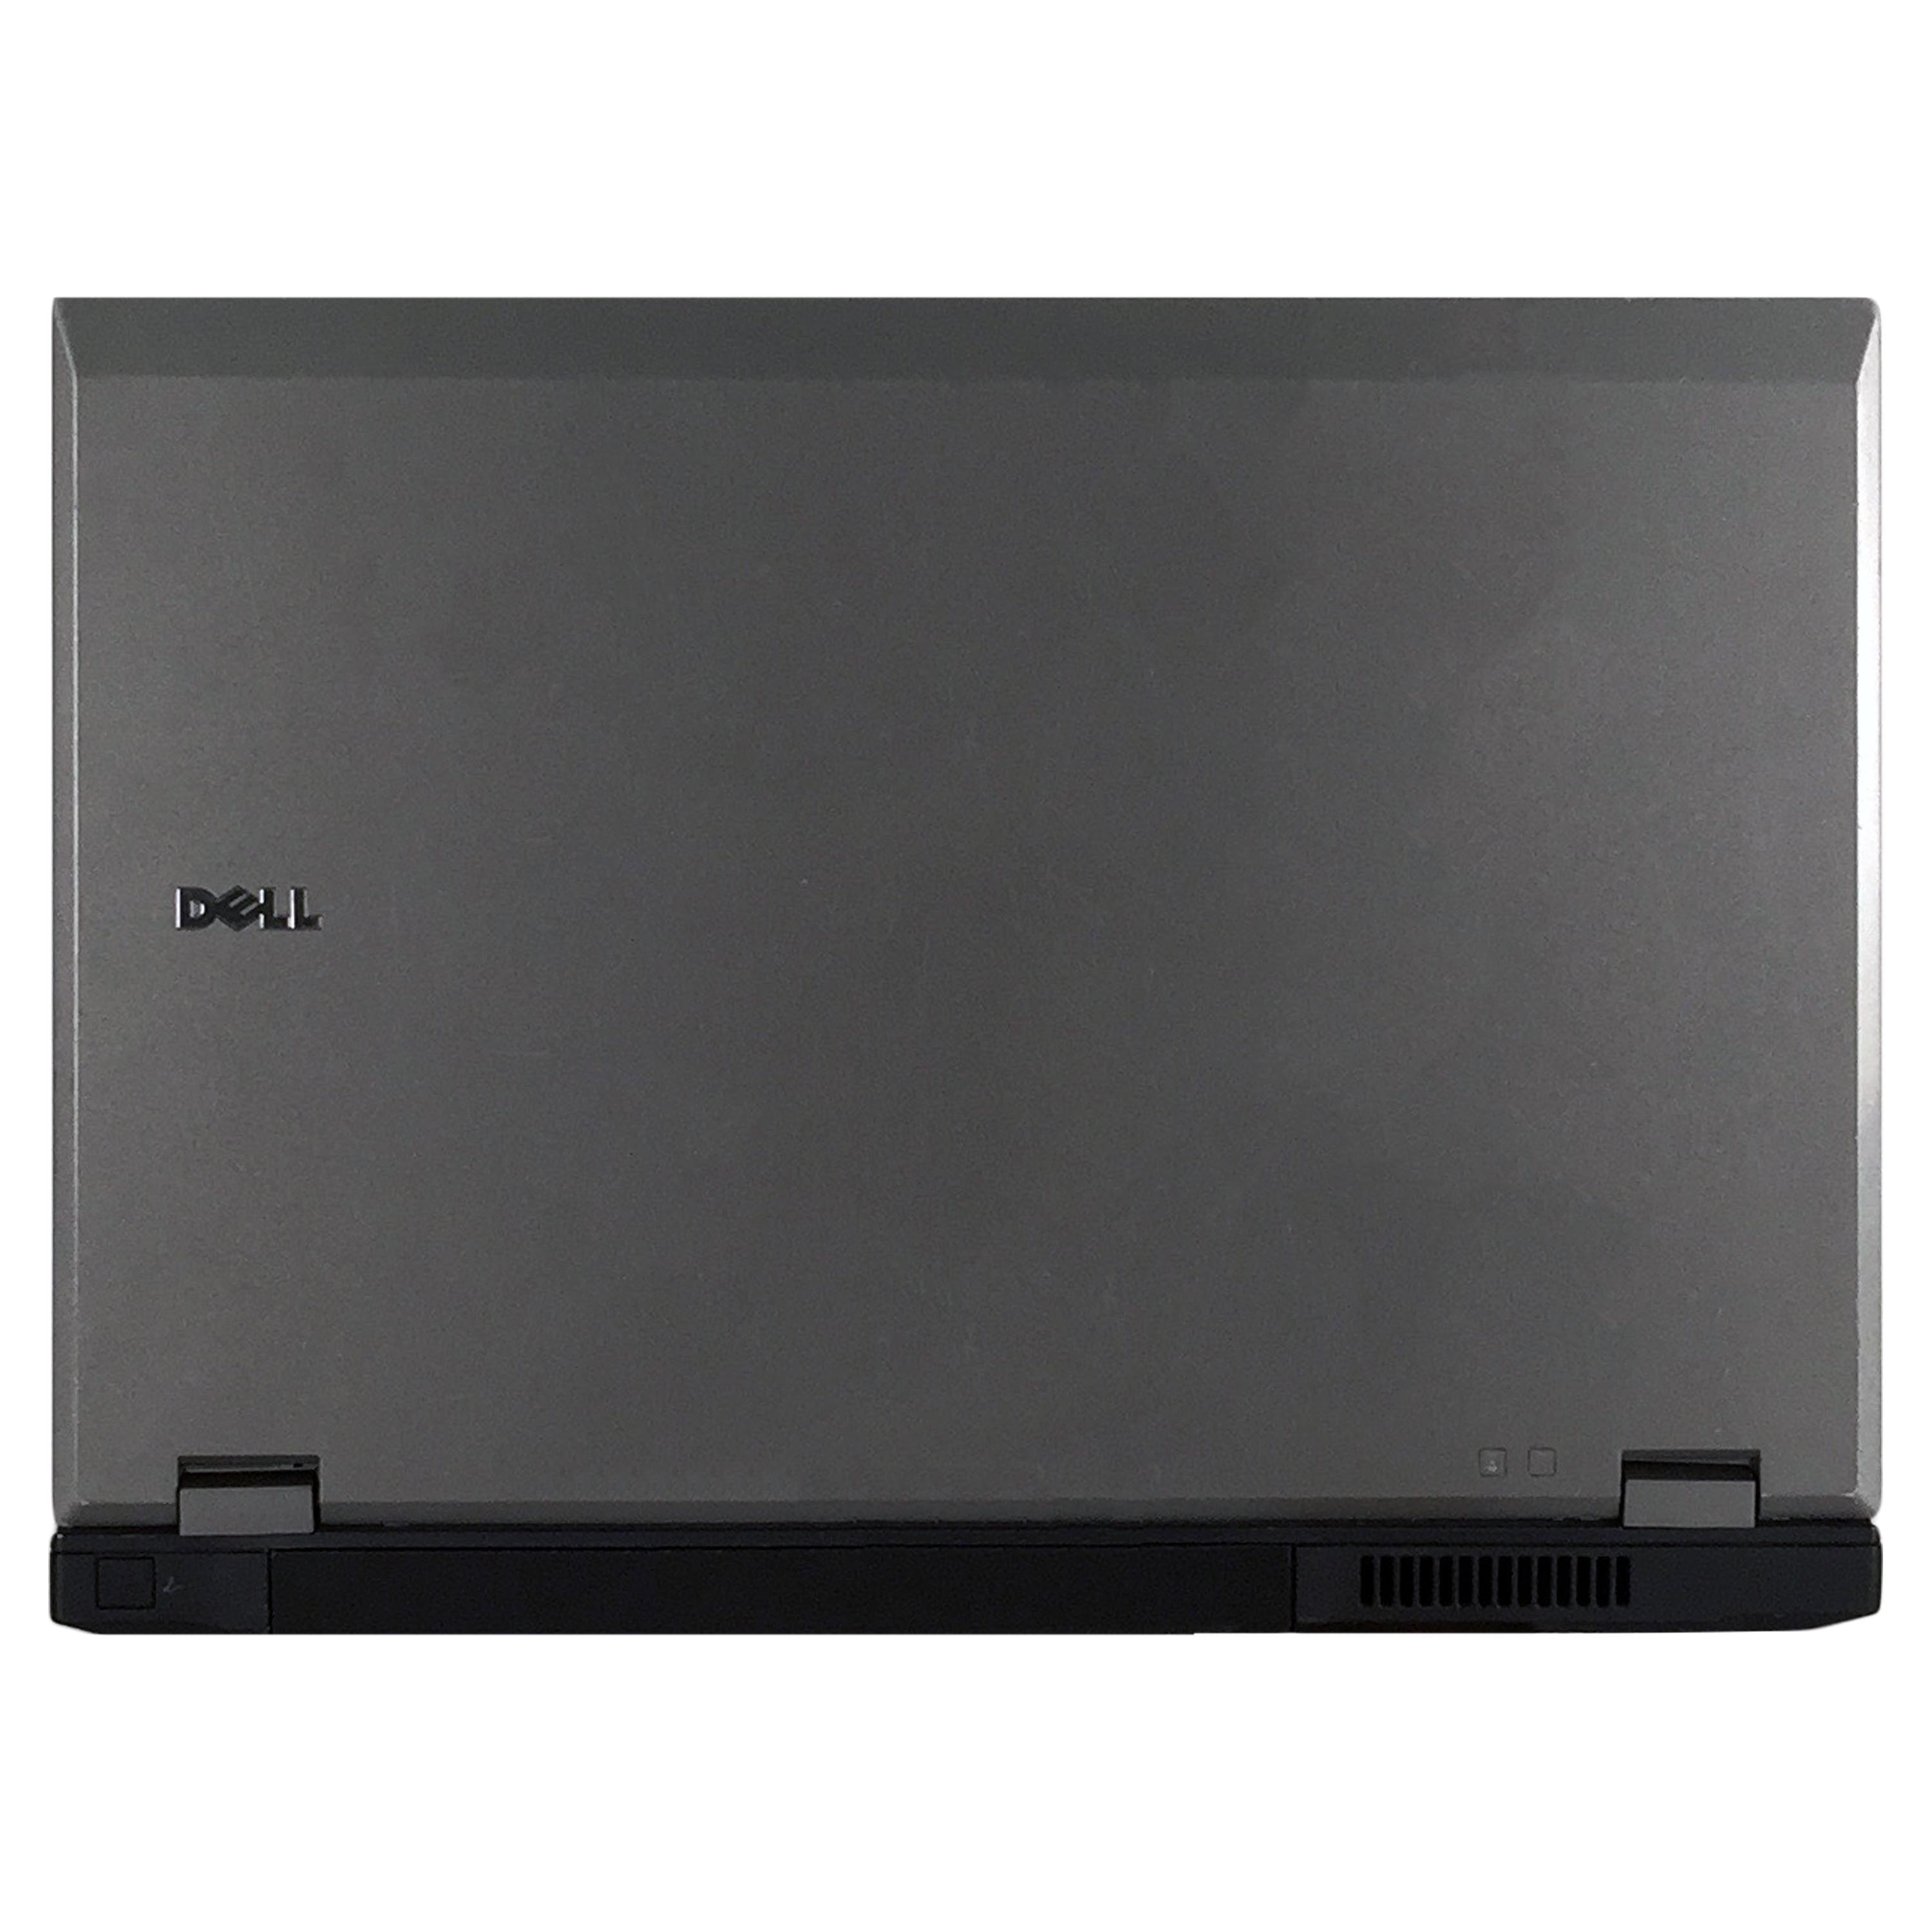 Shop Refurbished Laptop Dell Latitude E5510 15 6 Intel Core I3 350m 2 26ghz 4gb Ddr3 1gb Ssd Windows 10 Pro 1 Year Warranty Overstock